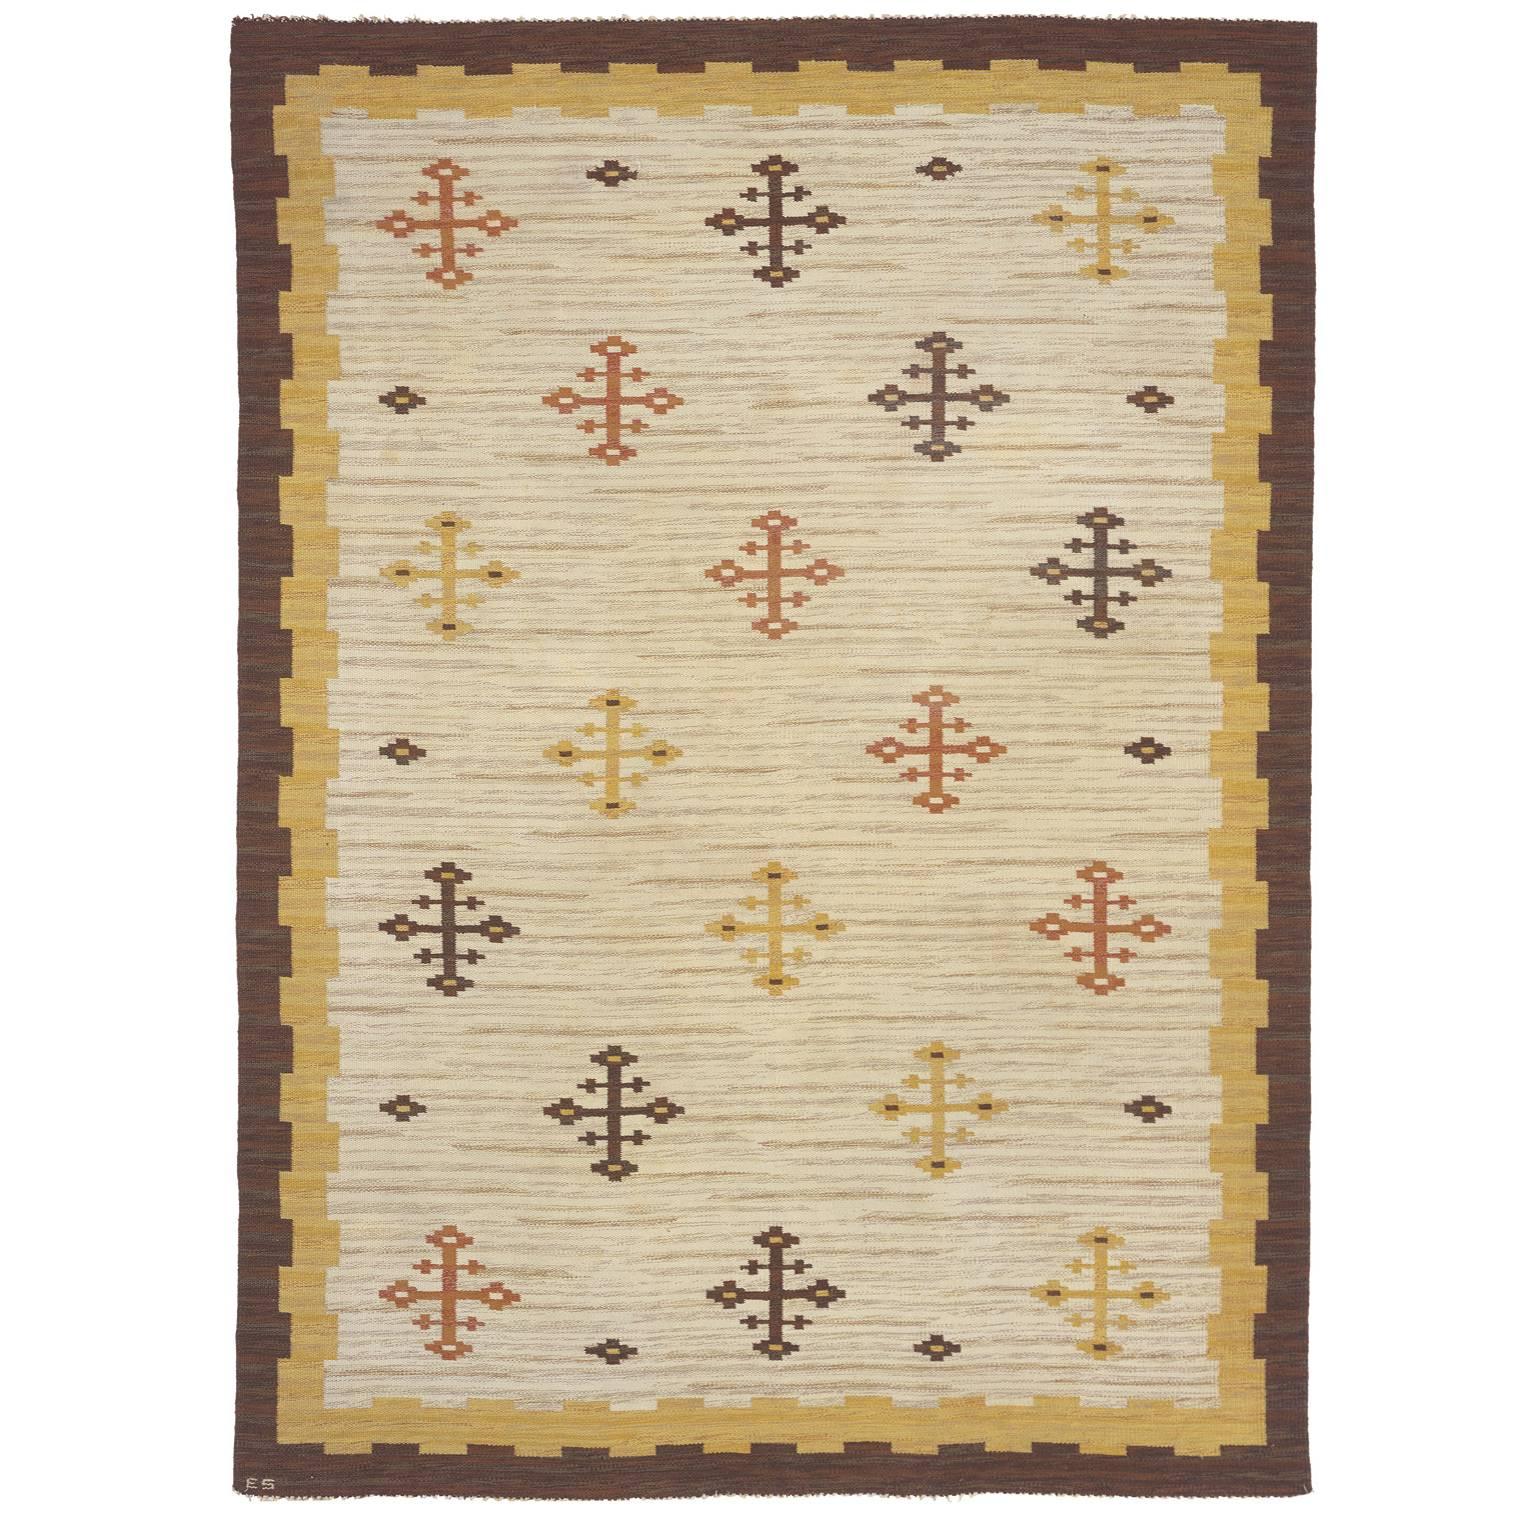 Early-20th Century Swedish Flat-Weave Carpet